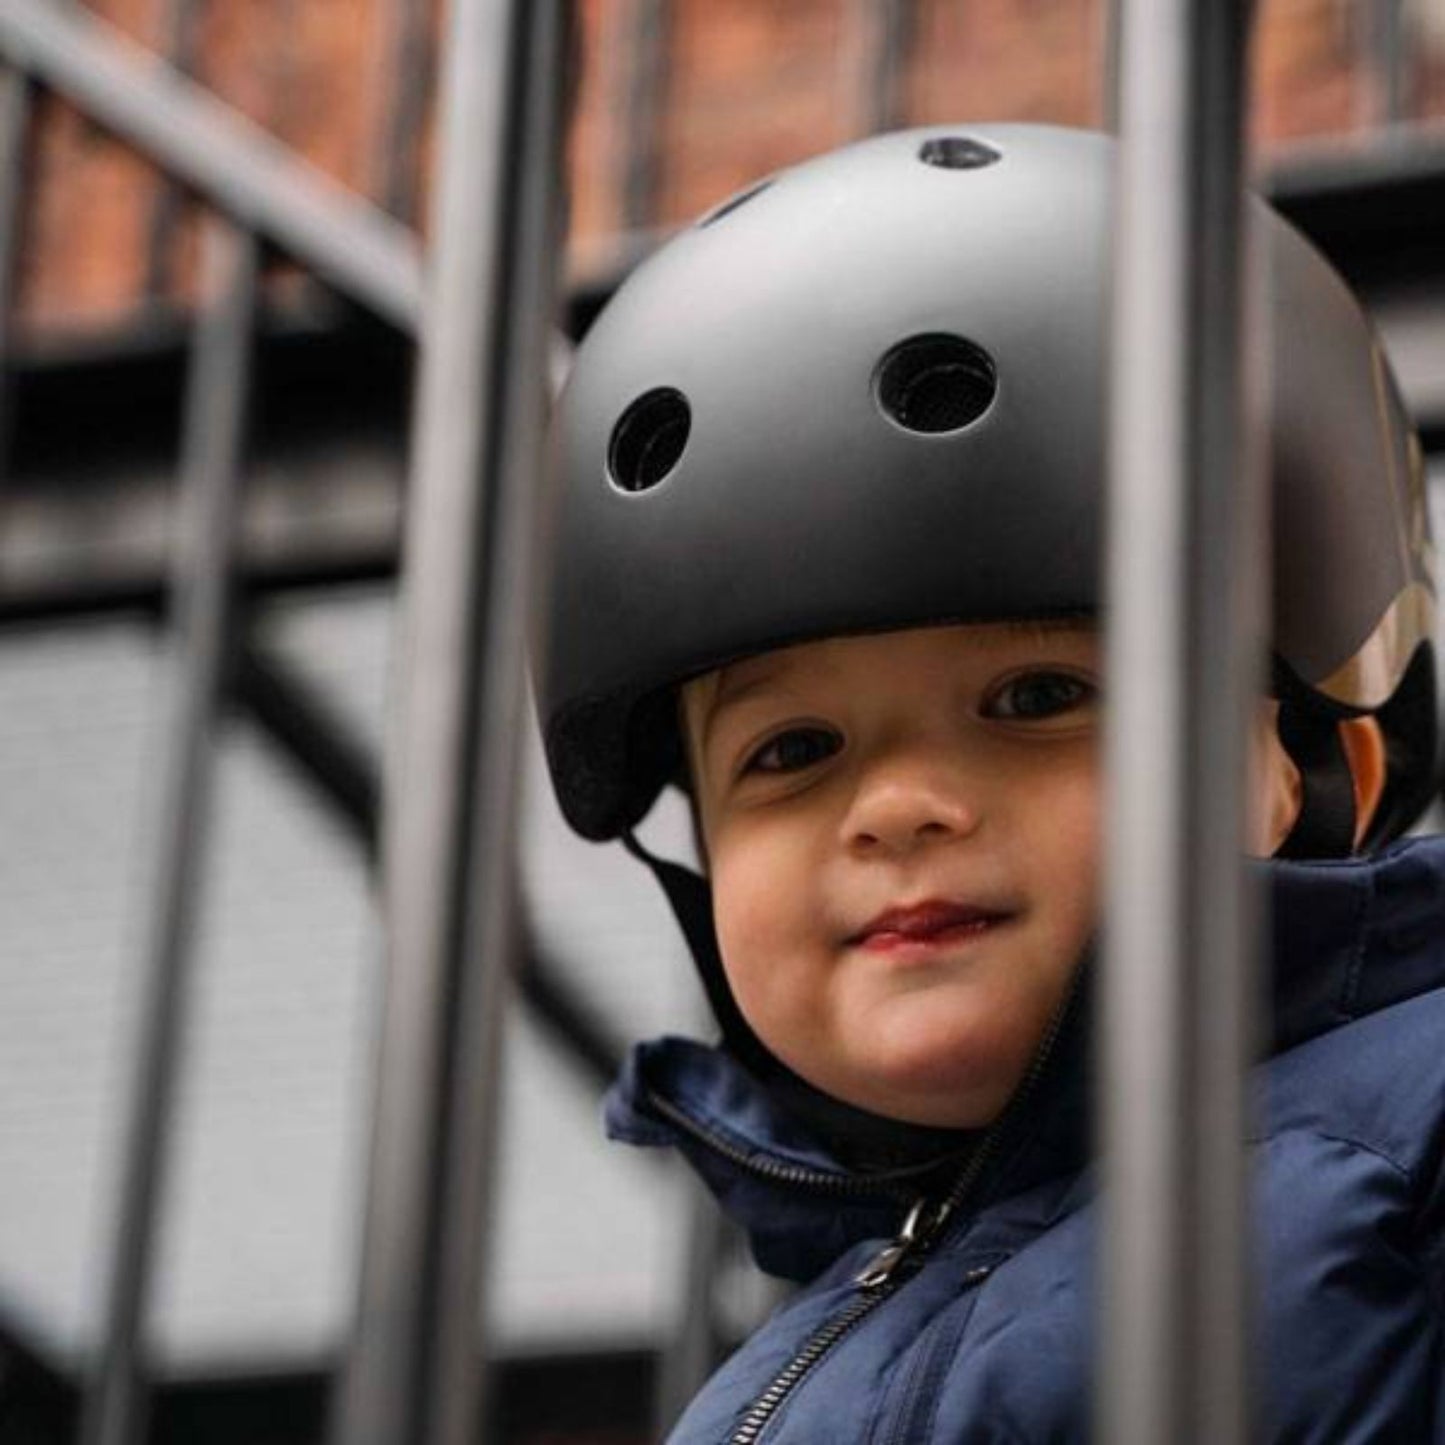 Scoot & Ride - Safety Helmet XXS-S (Gold Black)